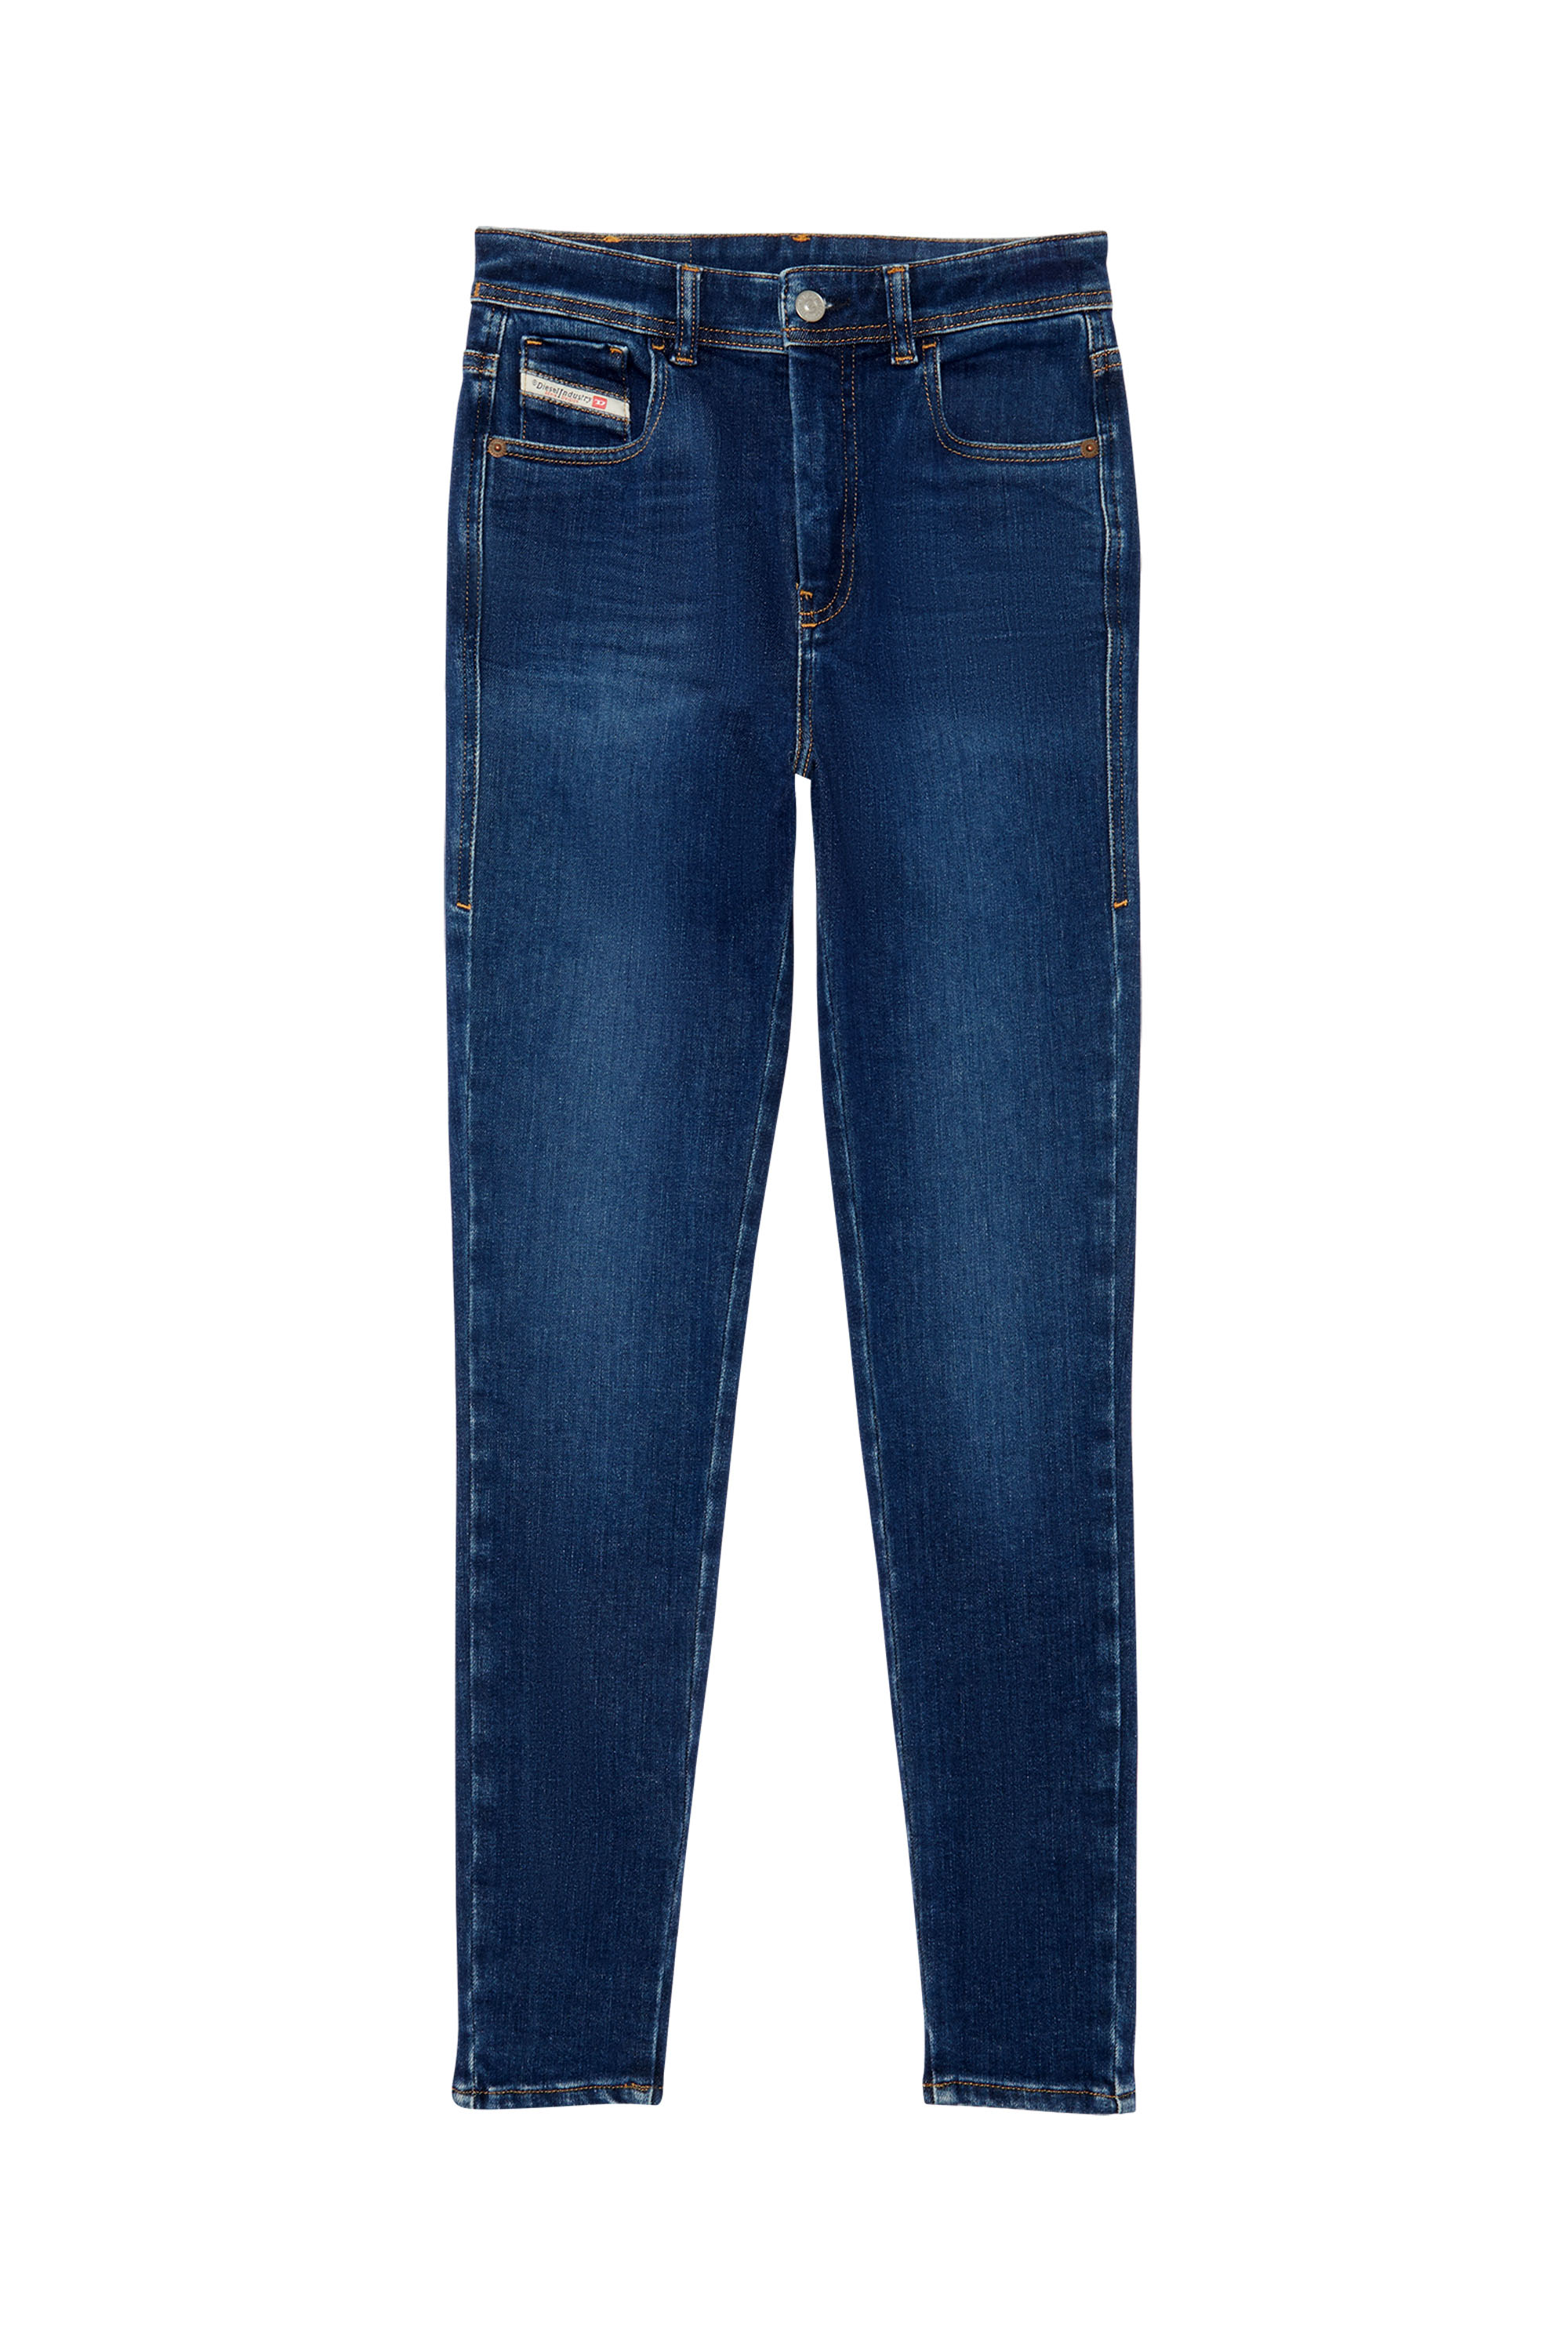 1984 SLANDY-HIGH 09C19 Super skinny Jeans, Dark Blue - Jeans